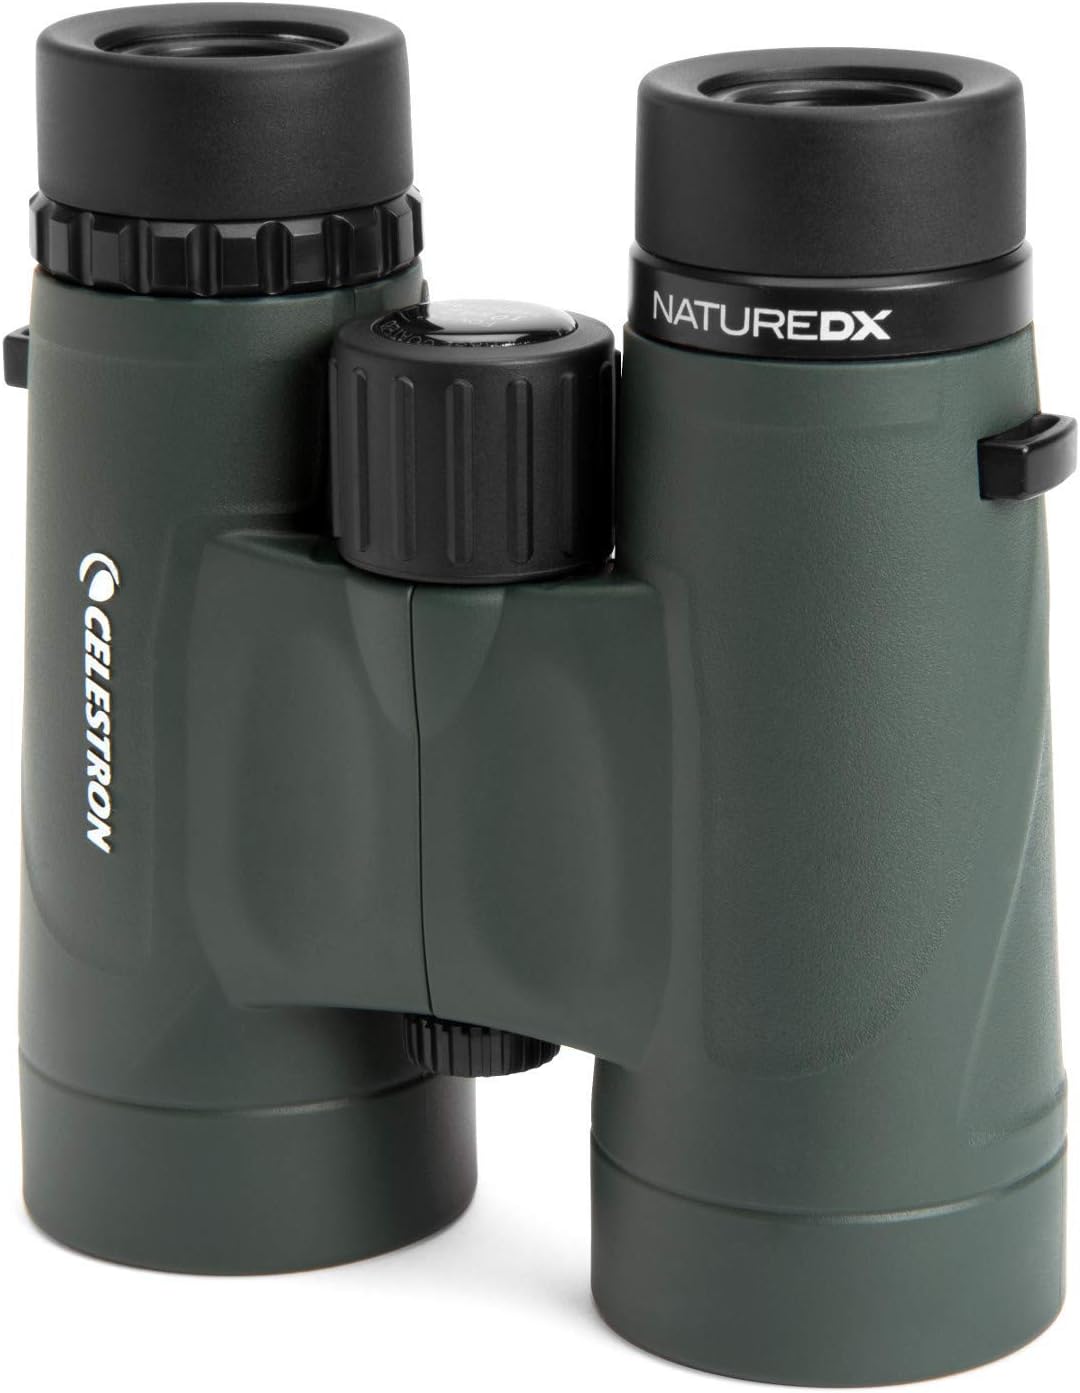 Celestron – Nature DX 8x42 Binoculars – Outdoor and Birding Binocular – Fully Multi-Coated with BaK-4 Prisms – Rubber Armored – Fog  Waterproof Binoculars – Top Pick Optics